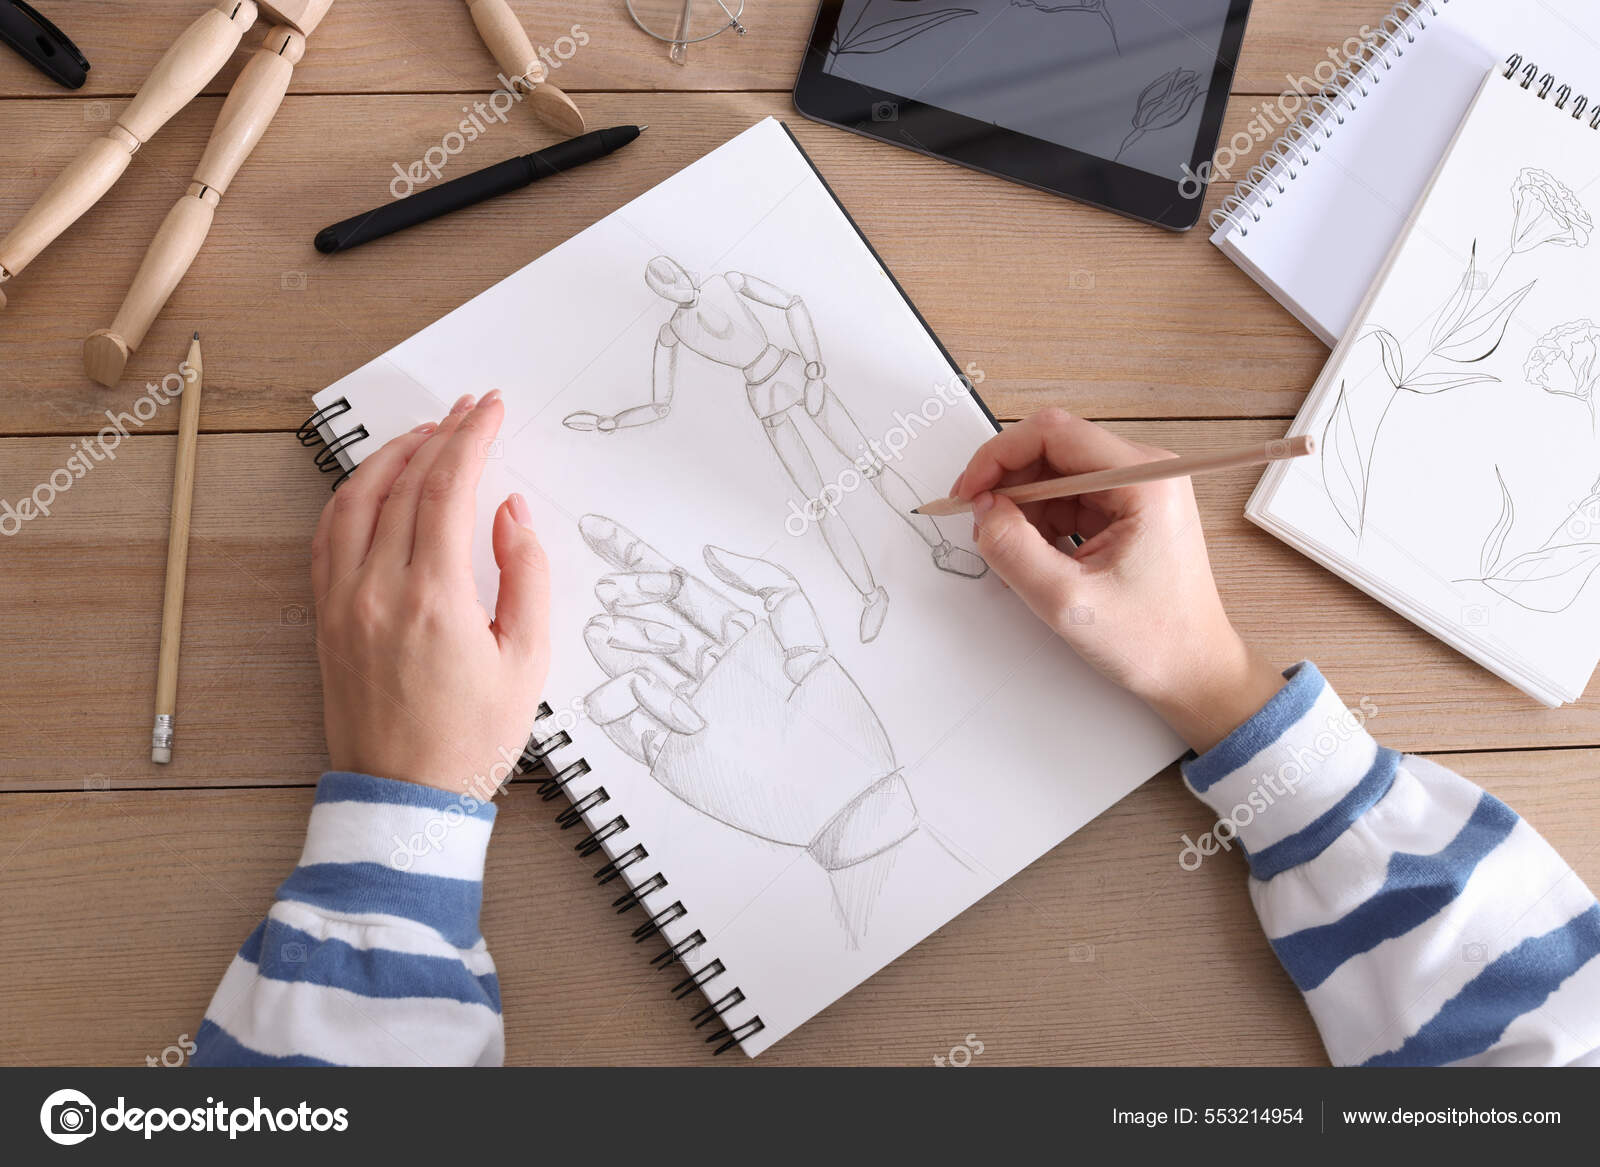 https://st.depositphotos.com/16122460/55321/i/1600/depositphotos_553214954-stock-photo-woman-drawing-sketchbook-pencil-wooden.jpg